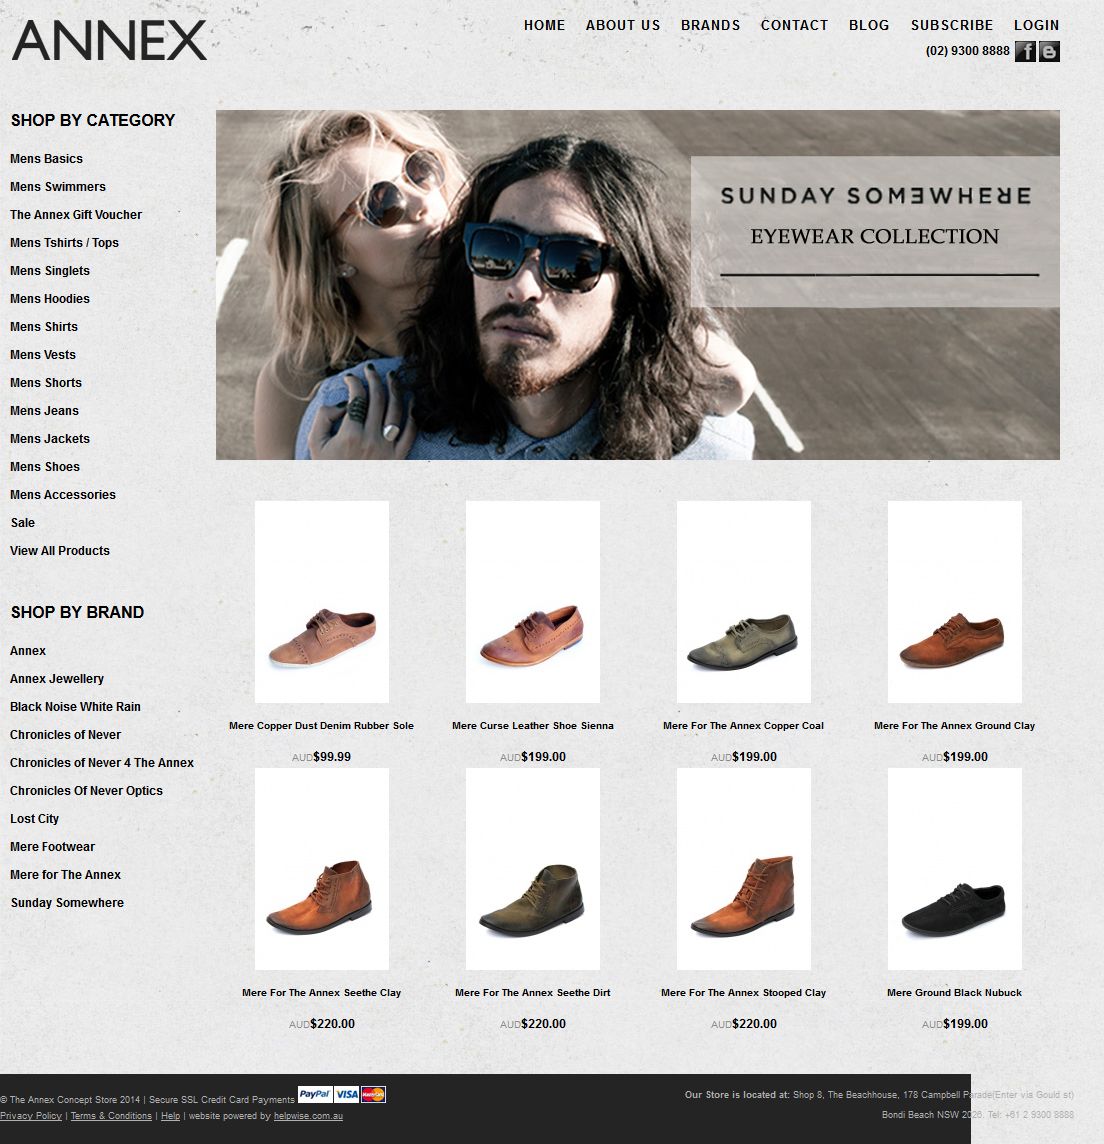 The Annex Fashion Store